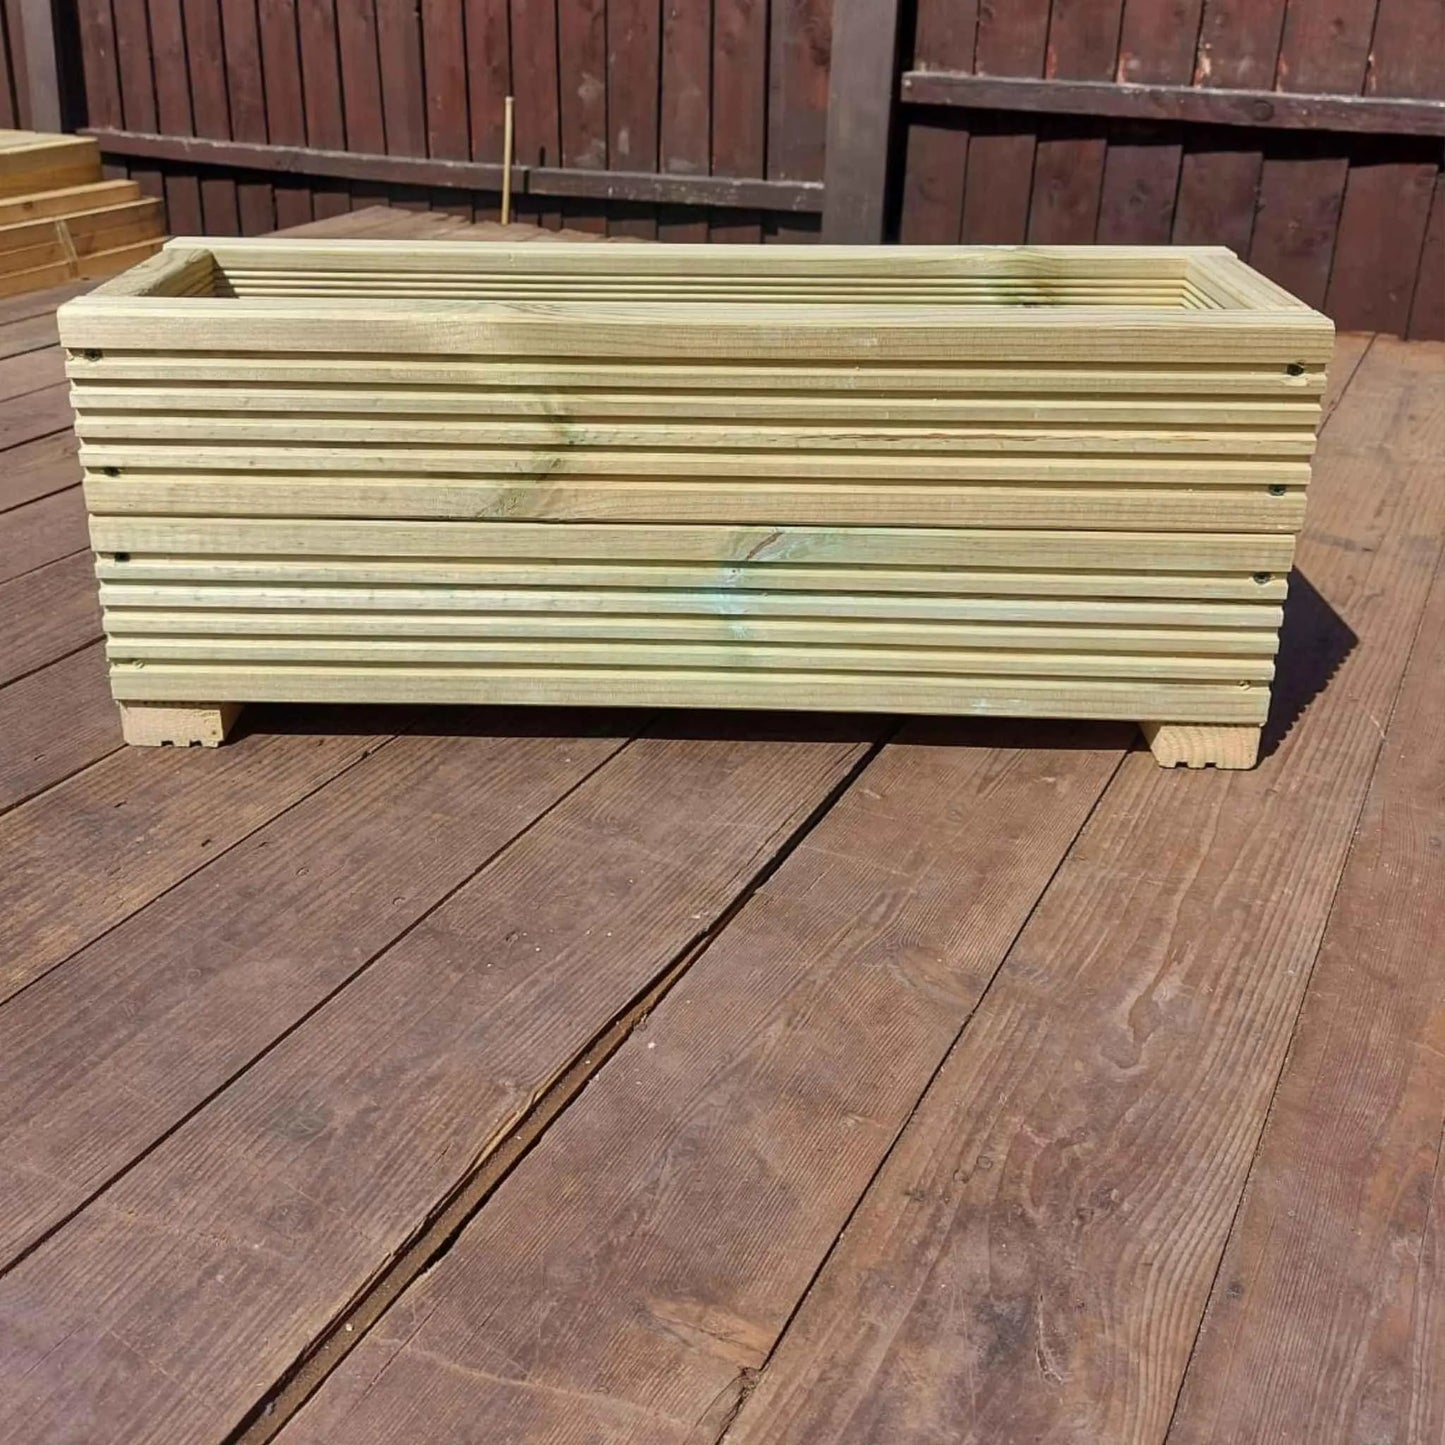 70cm long double tier wooden decking planter - Summer Wooden Planters